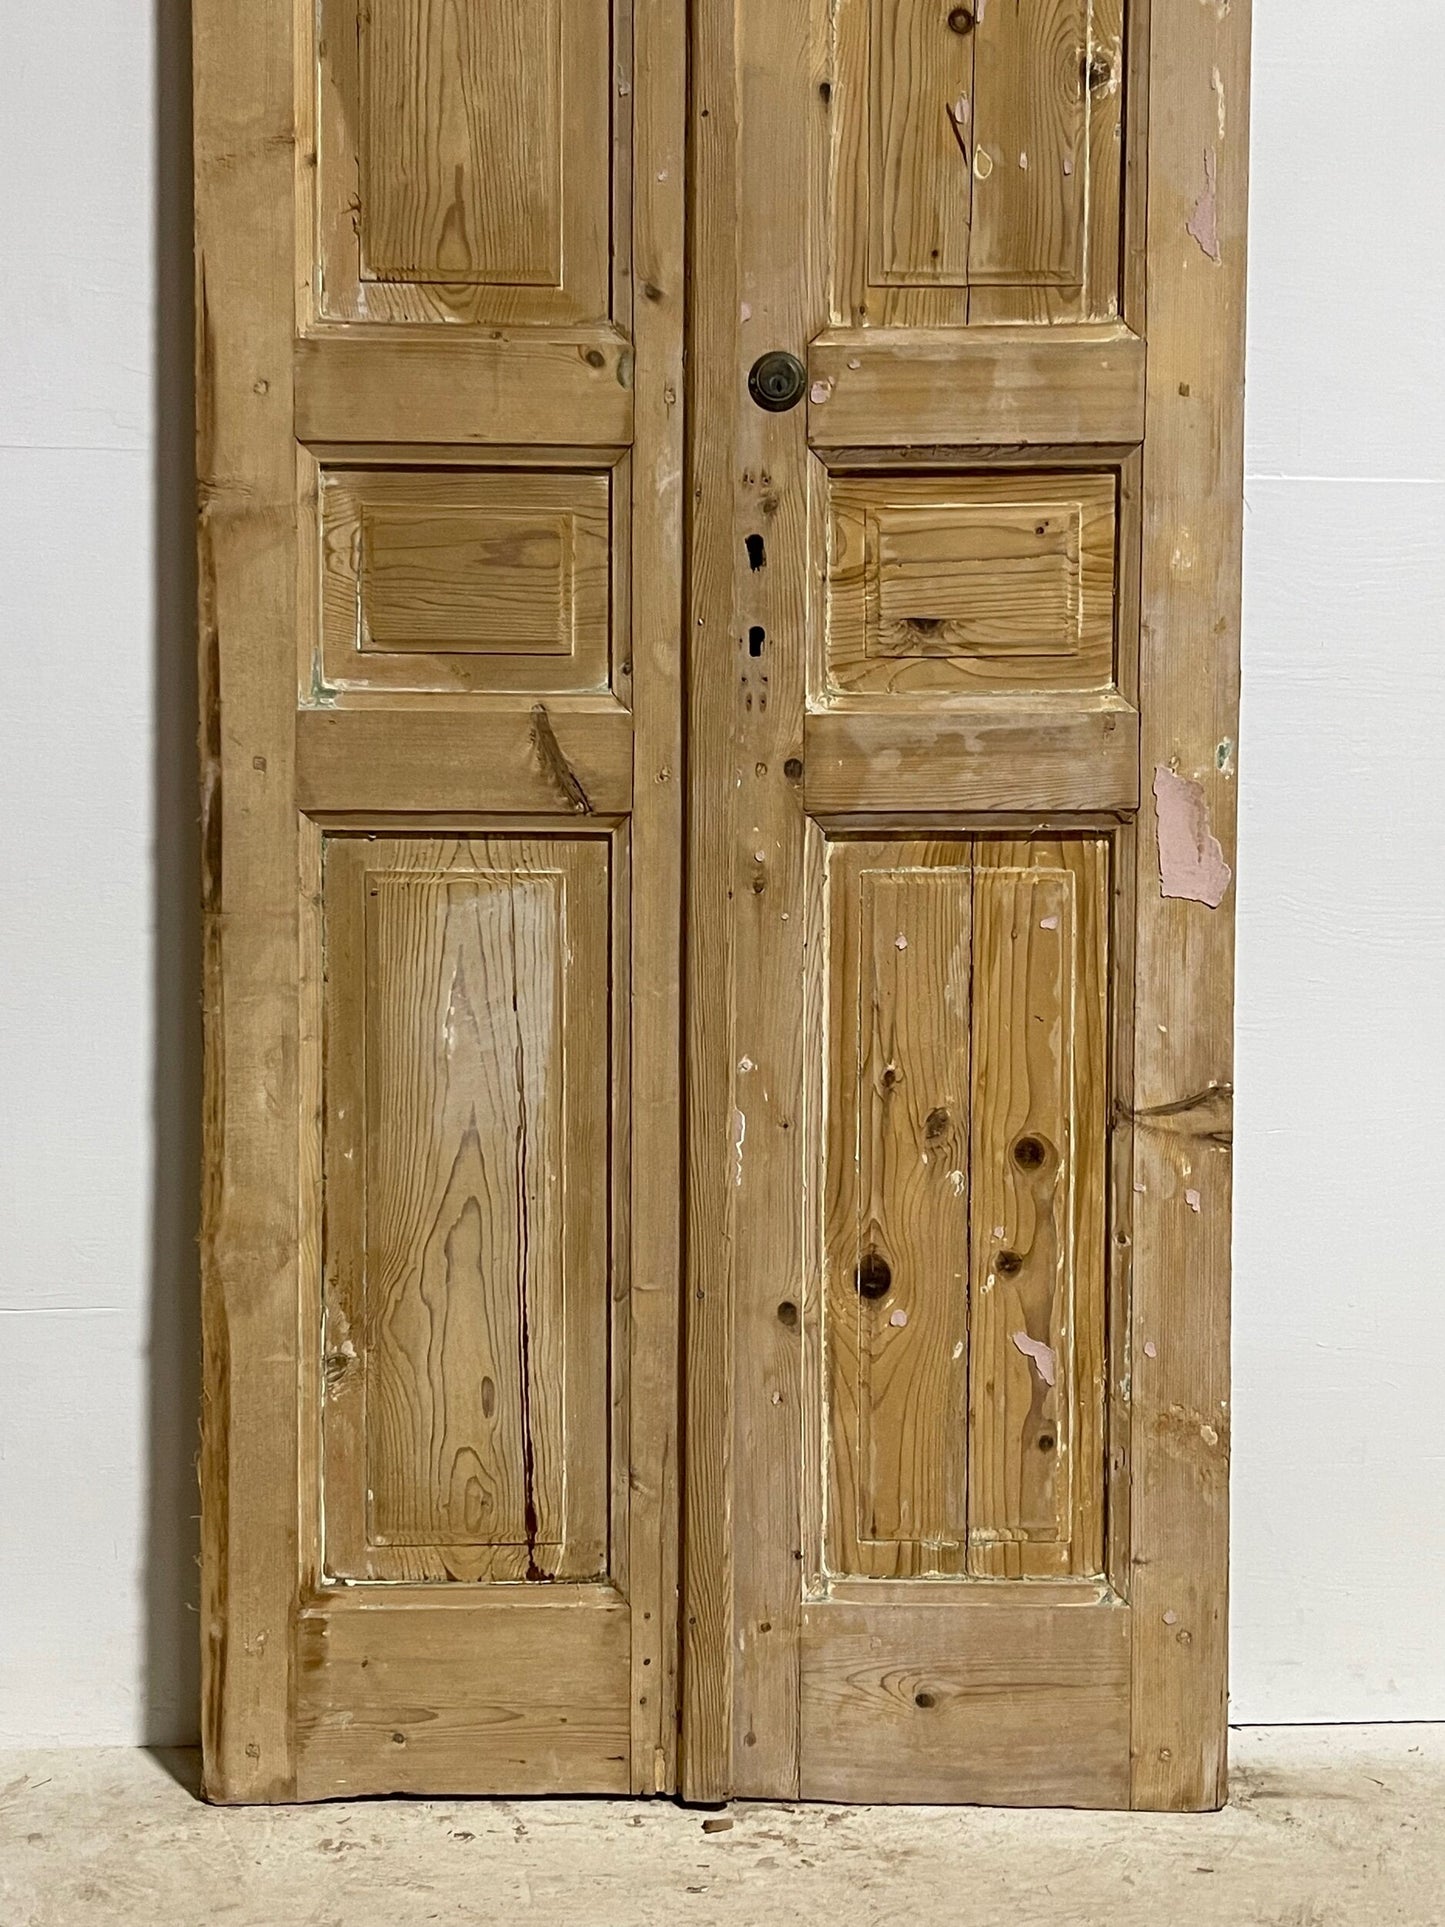 Antique French doors (95.25x36.5) H0144s